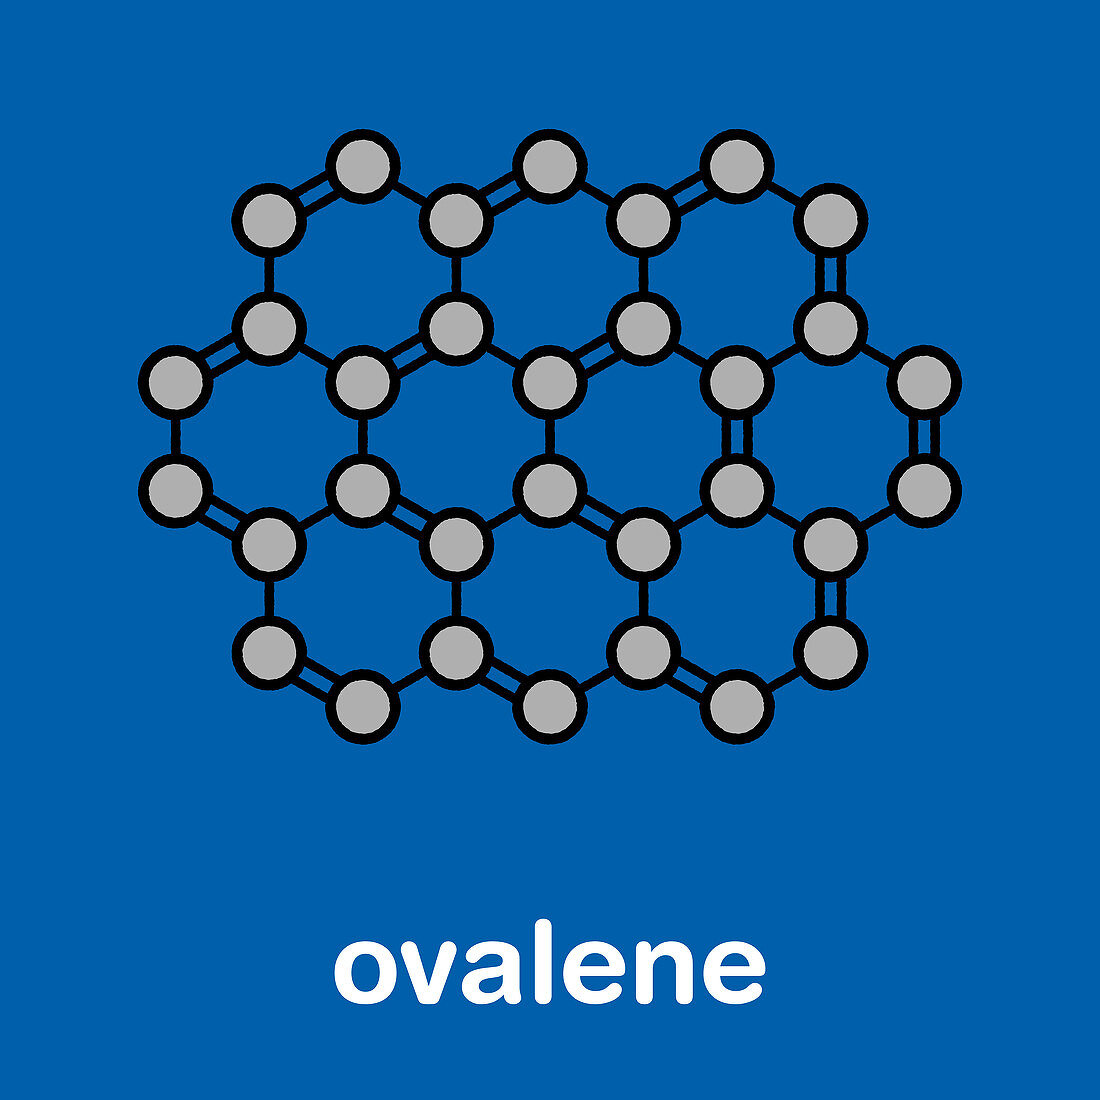 Ovalene polycyclic aromatic hydrocarbon molecule